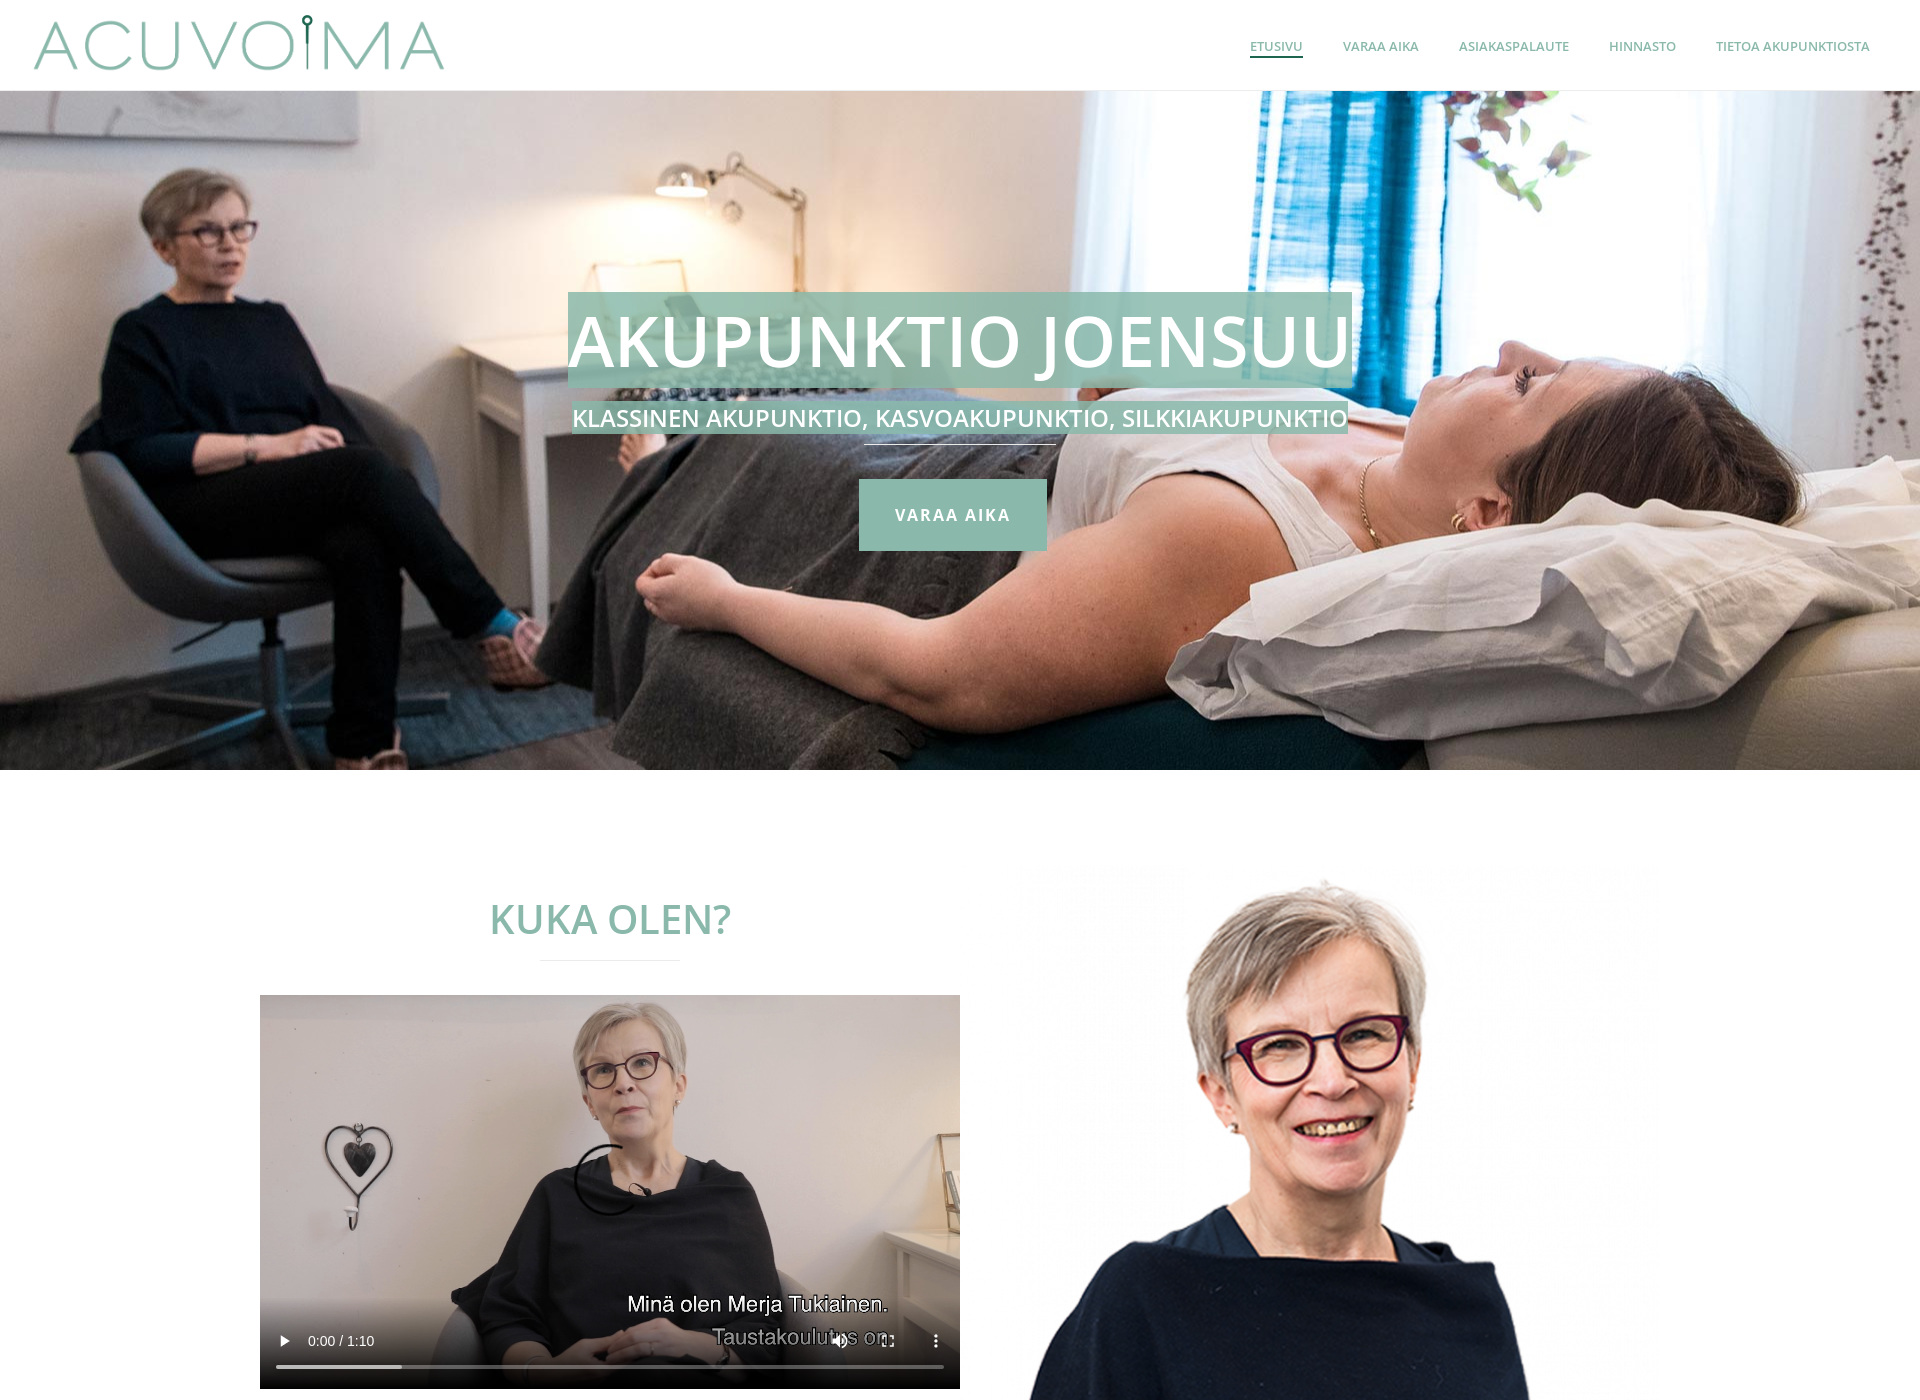 Näyttökuva akupunktiojoensuu.fi